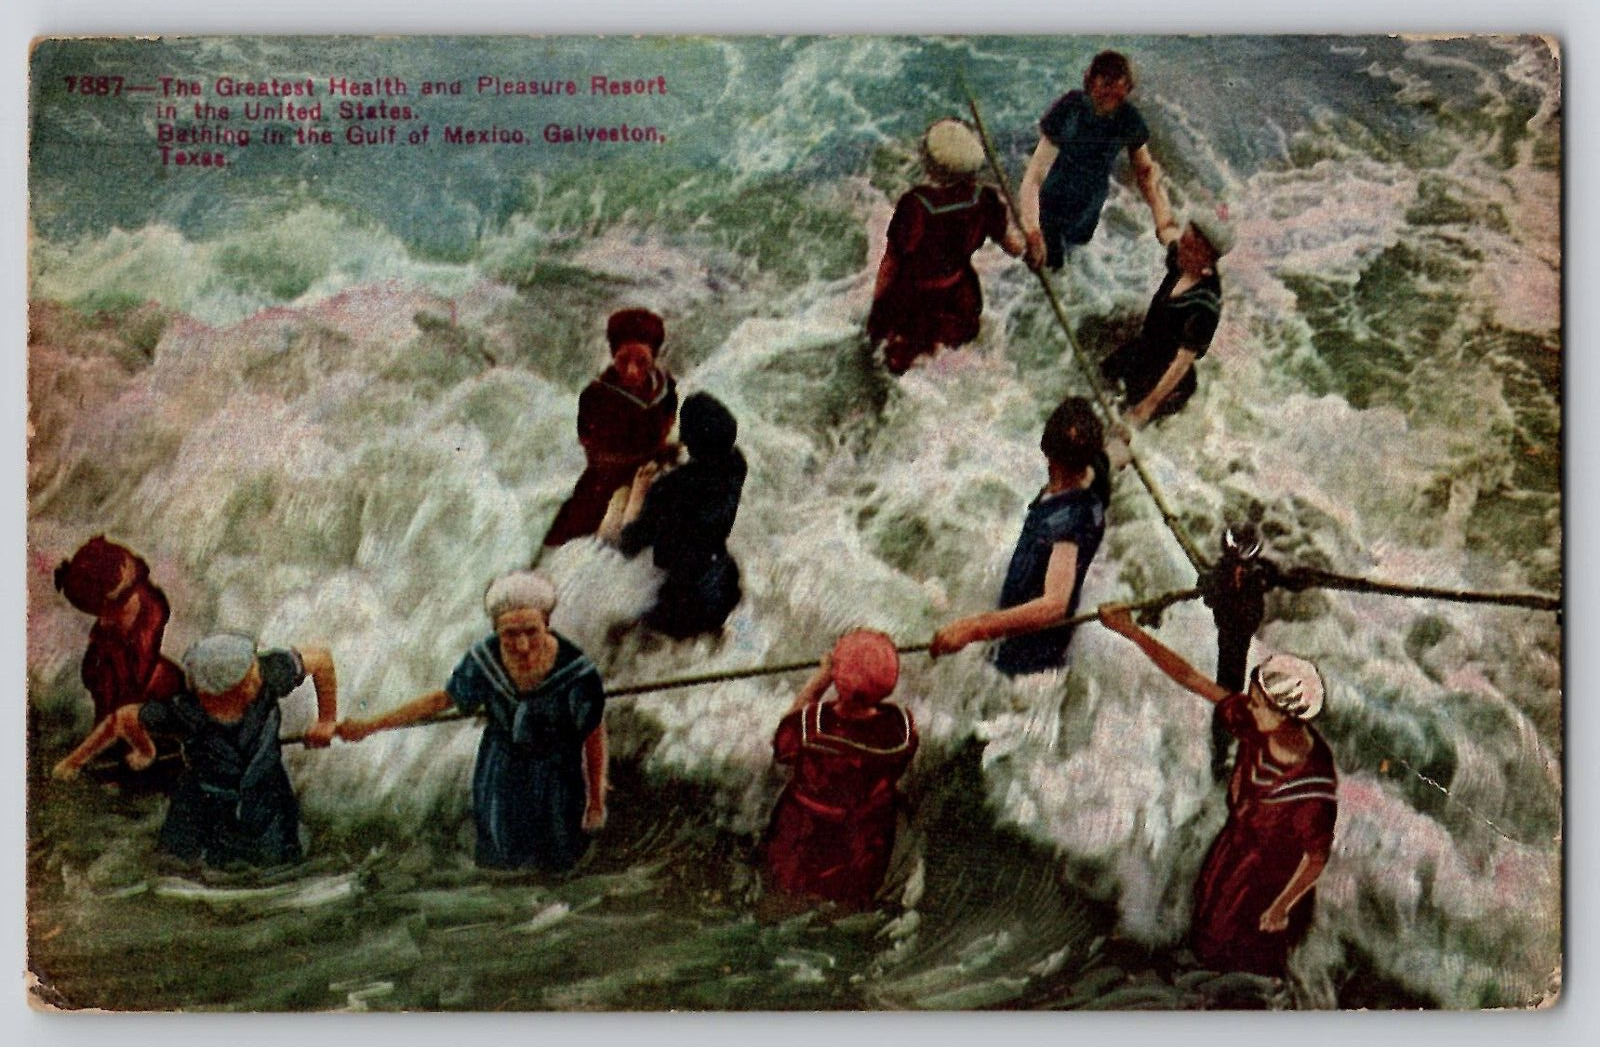 1910 Bathing Swimming Gulf of Mexico Galveston TX Pleasure Resport Postcard